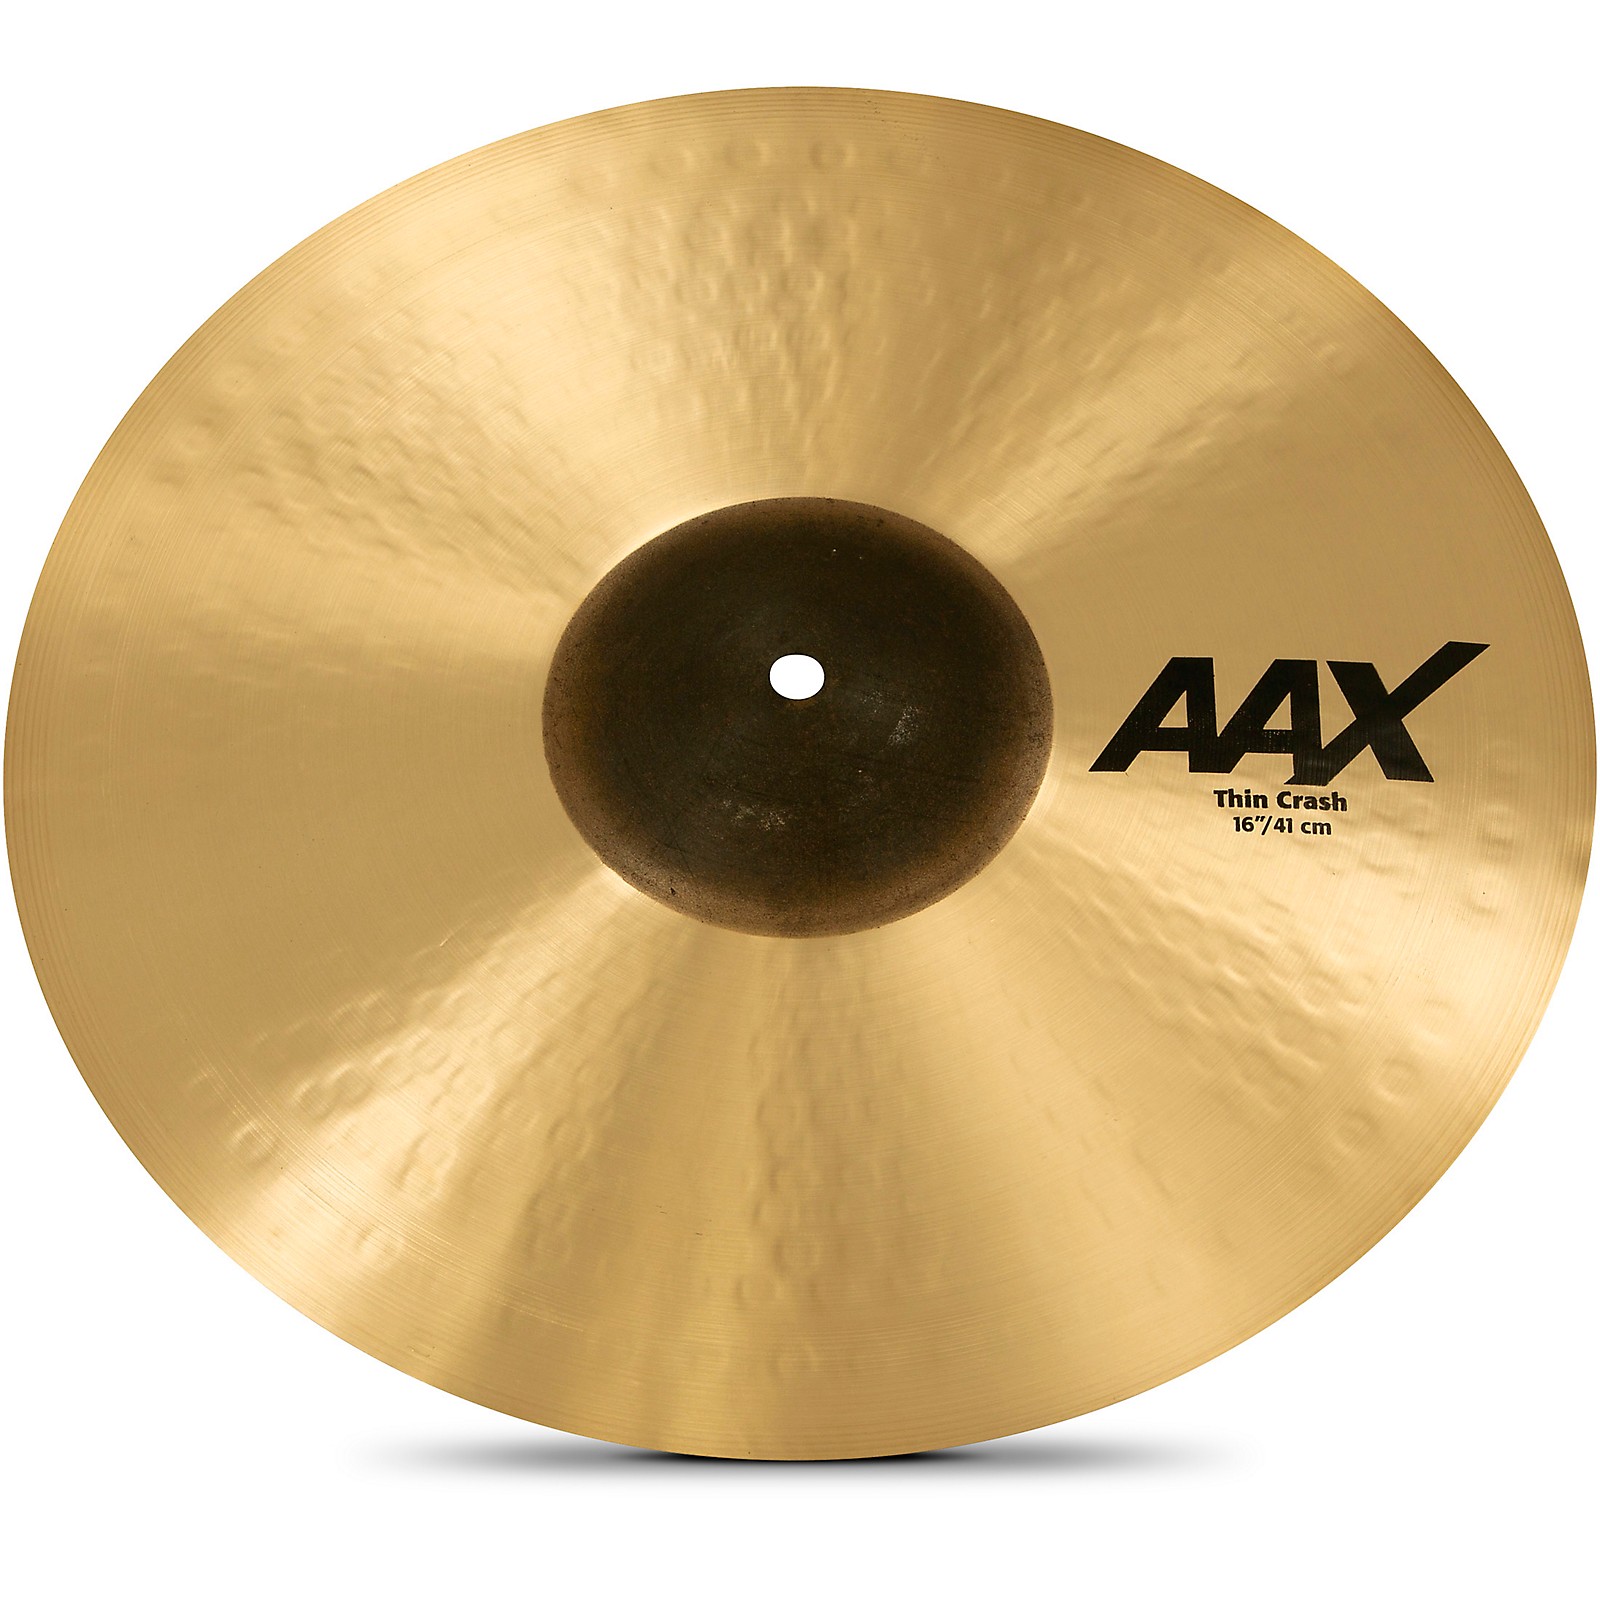 SABIAN AAX Thin Crash Cymbal 16 in. | Guitar Center